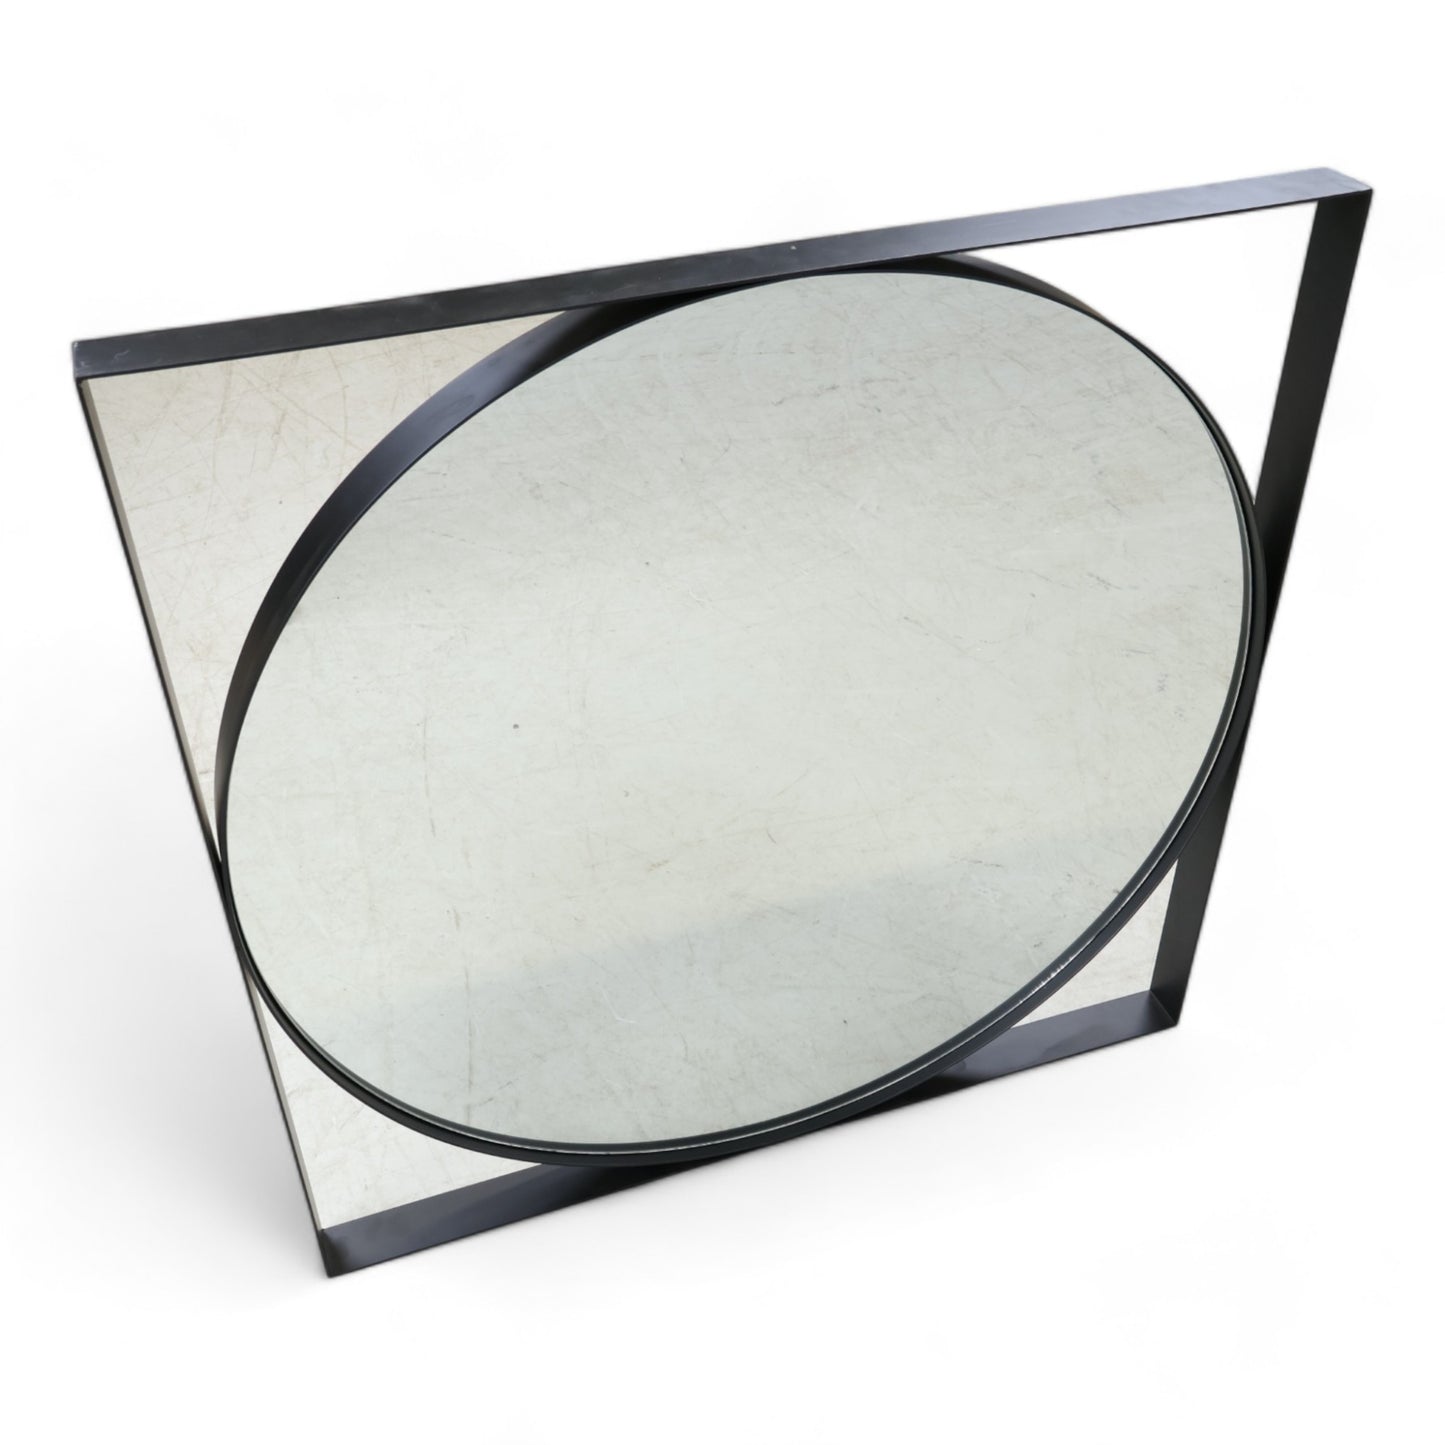 Nyrenset | Moderne kvadratisk speil fra SixBondStreet